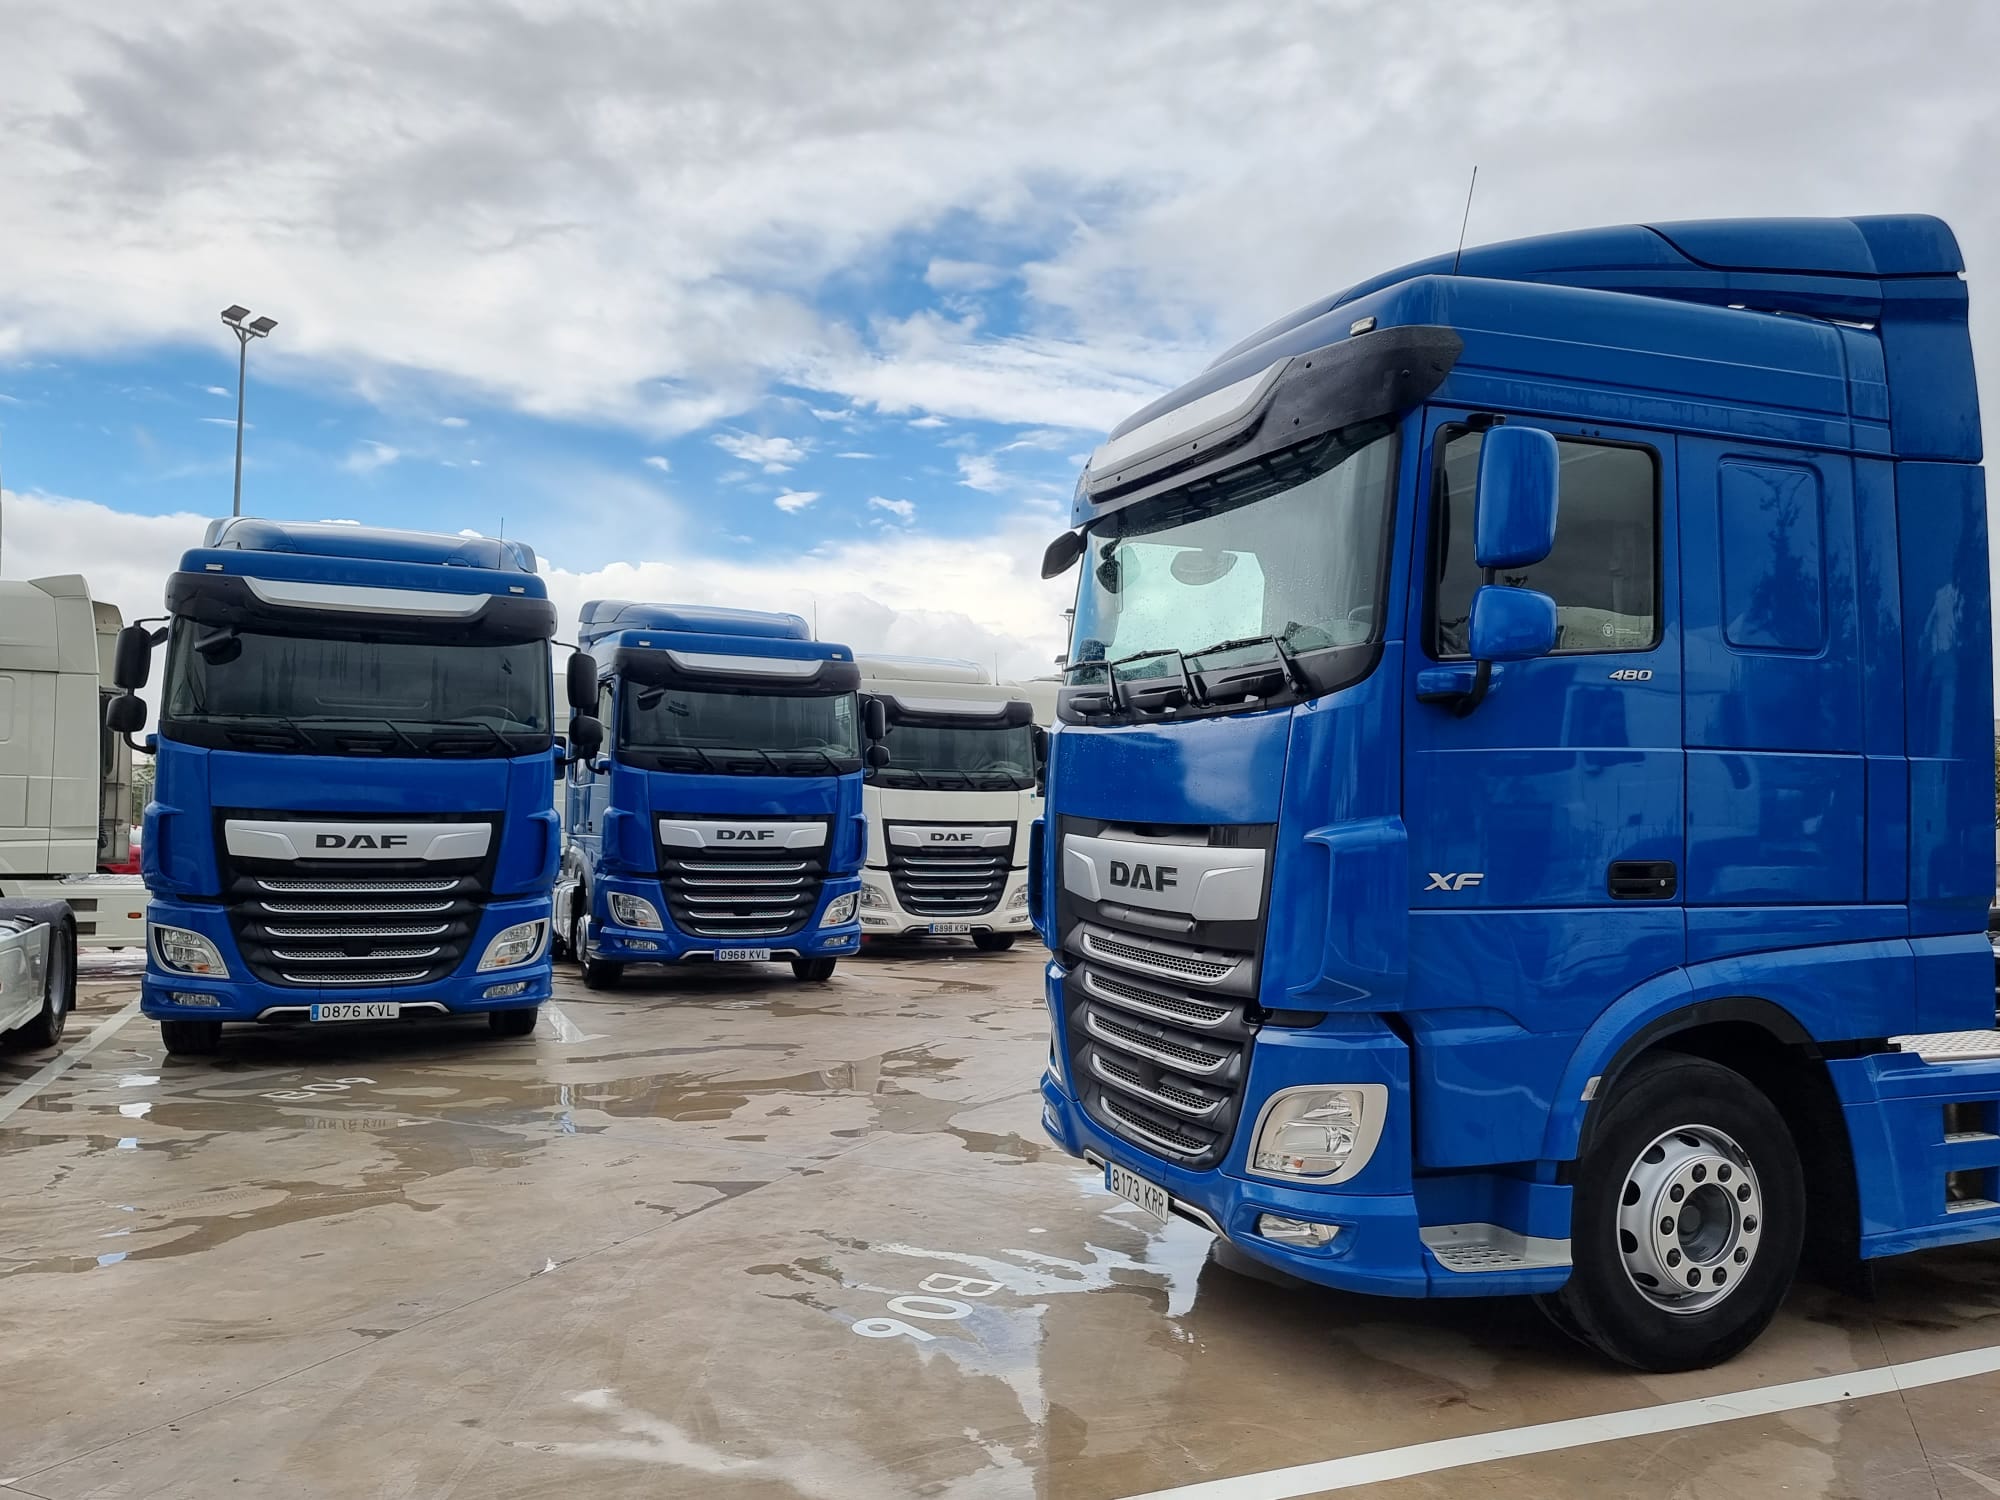 El DAF Used Trucks España espera vender 300 usados